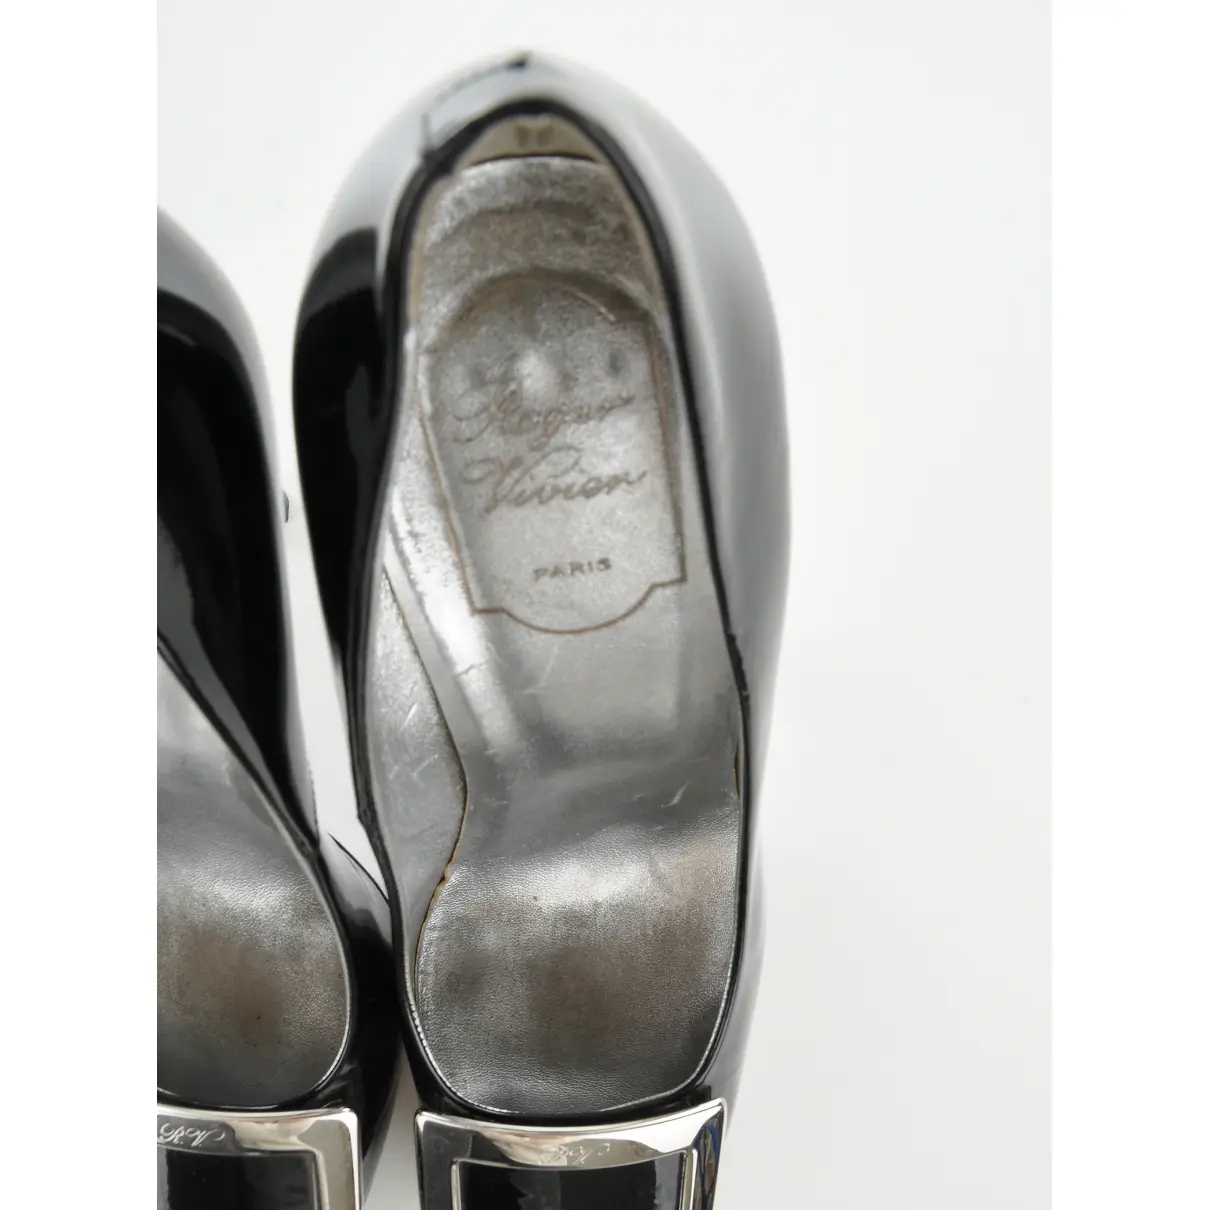 Vertigo leather heels Roger Vivier